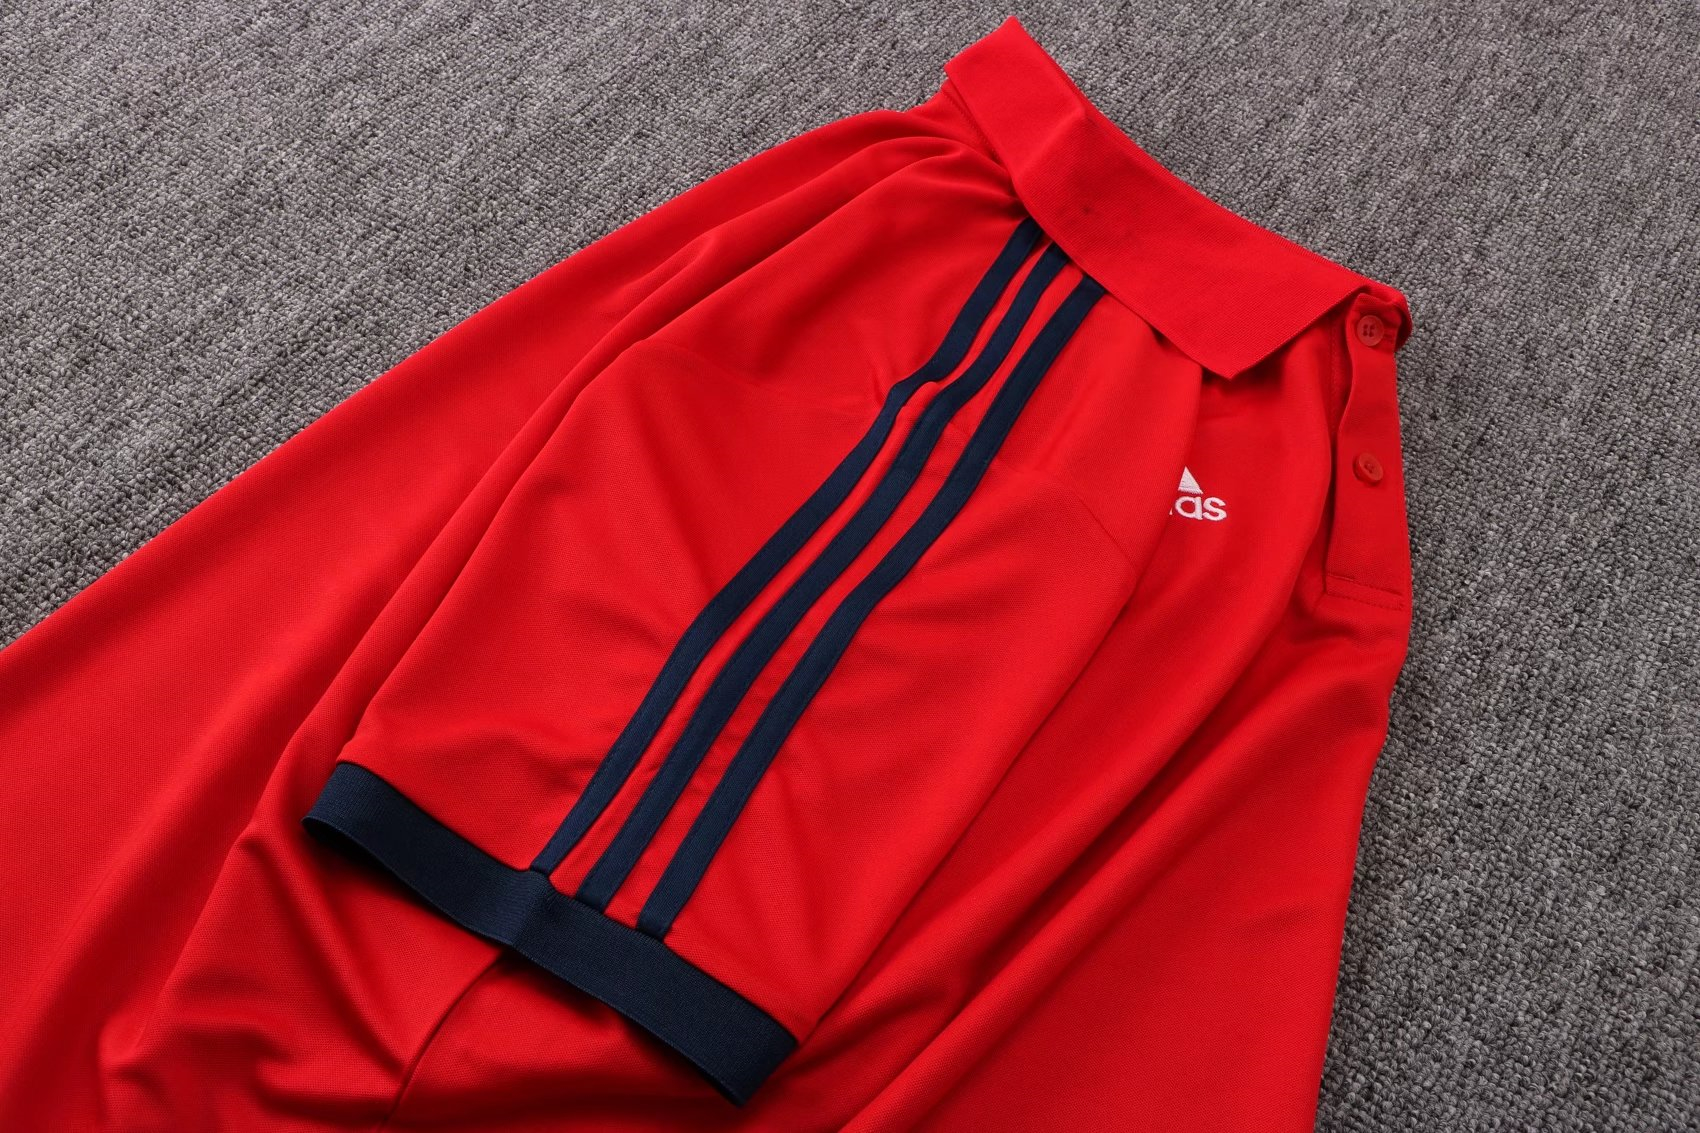 Arsenal Soccer Polo Jersey Red - Black Stripes Mens 2021/22